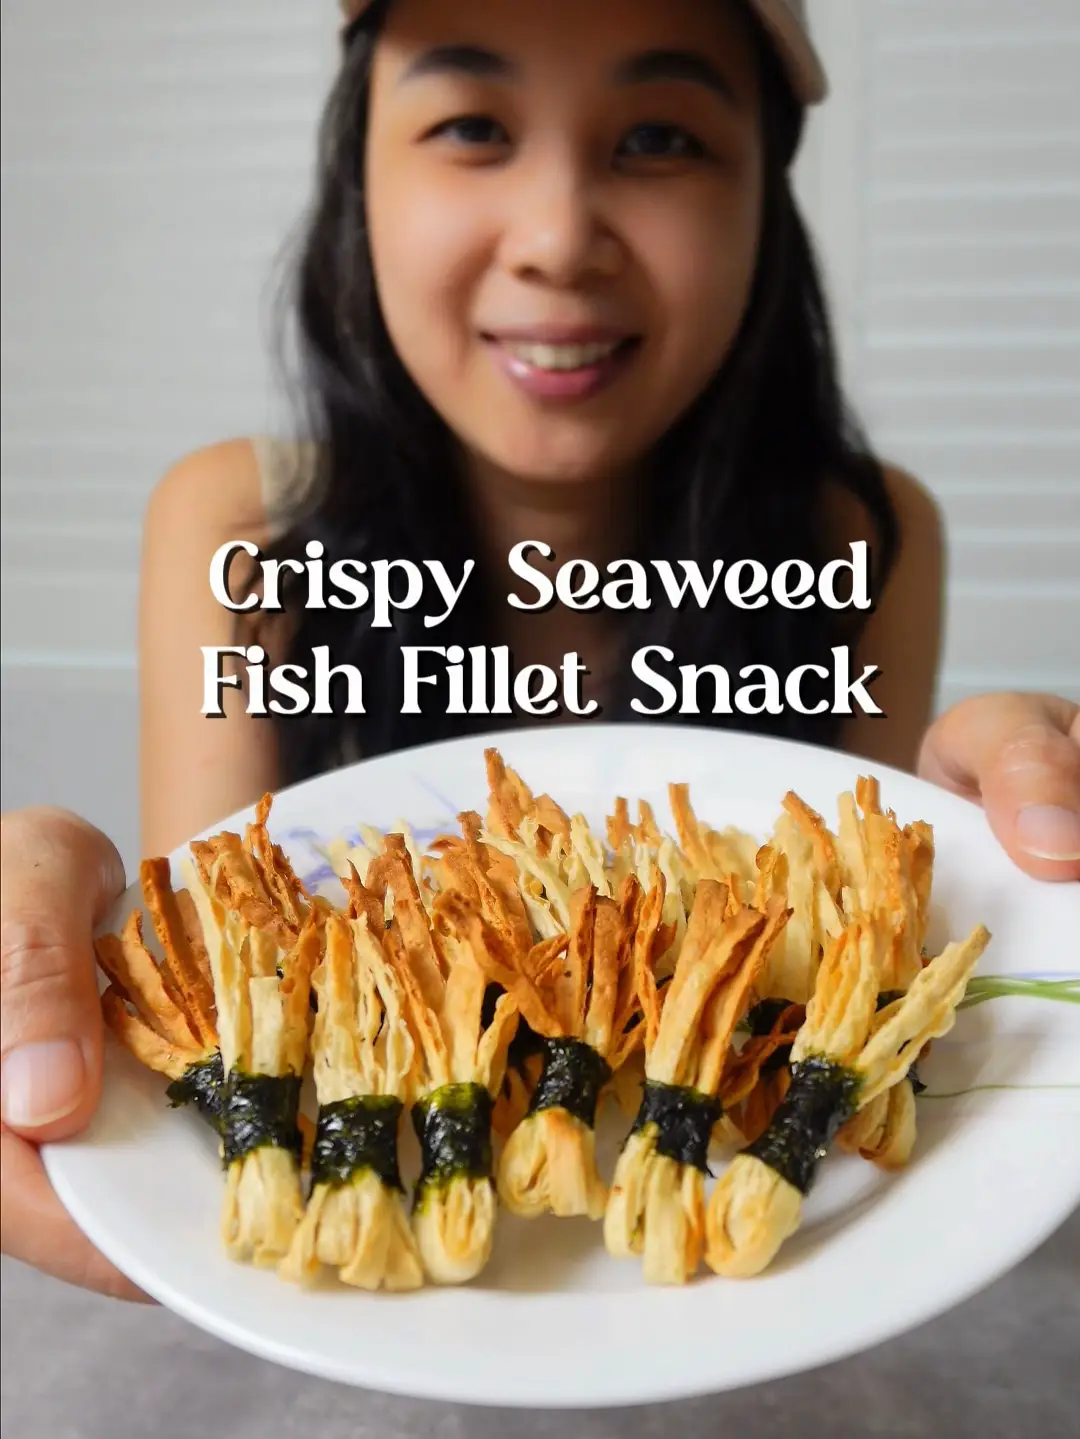 Crispy Seaweed Fish Fillet Snack's images